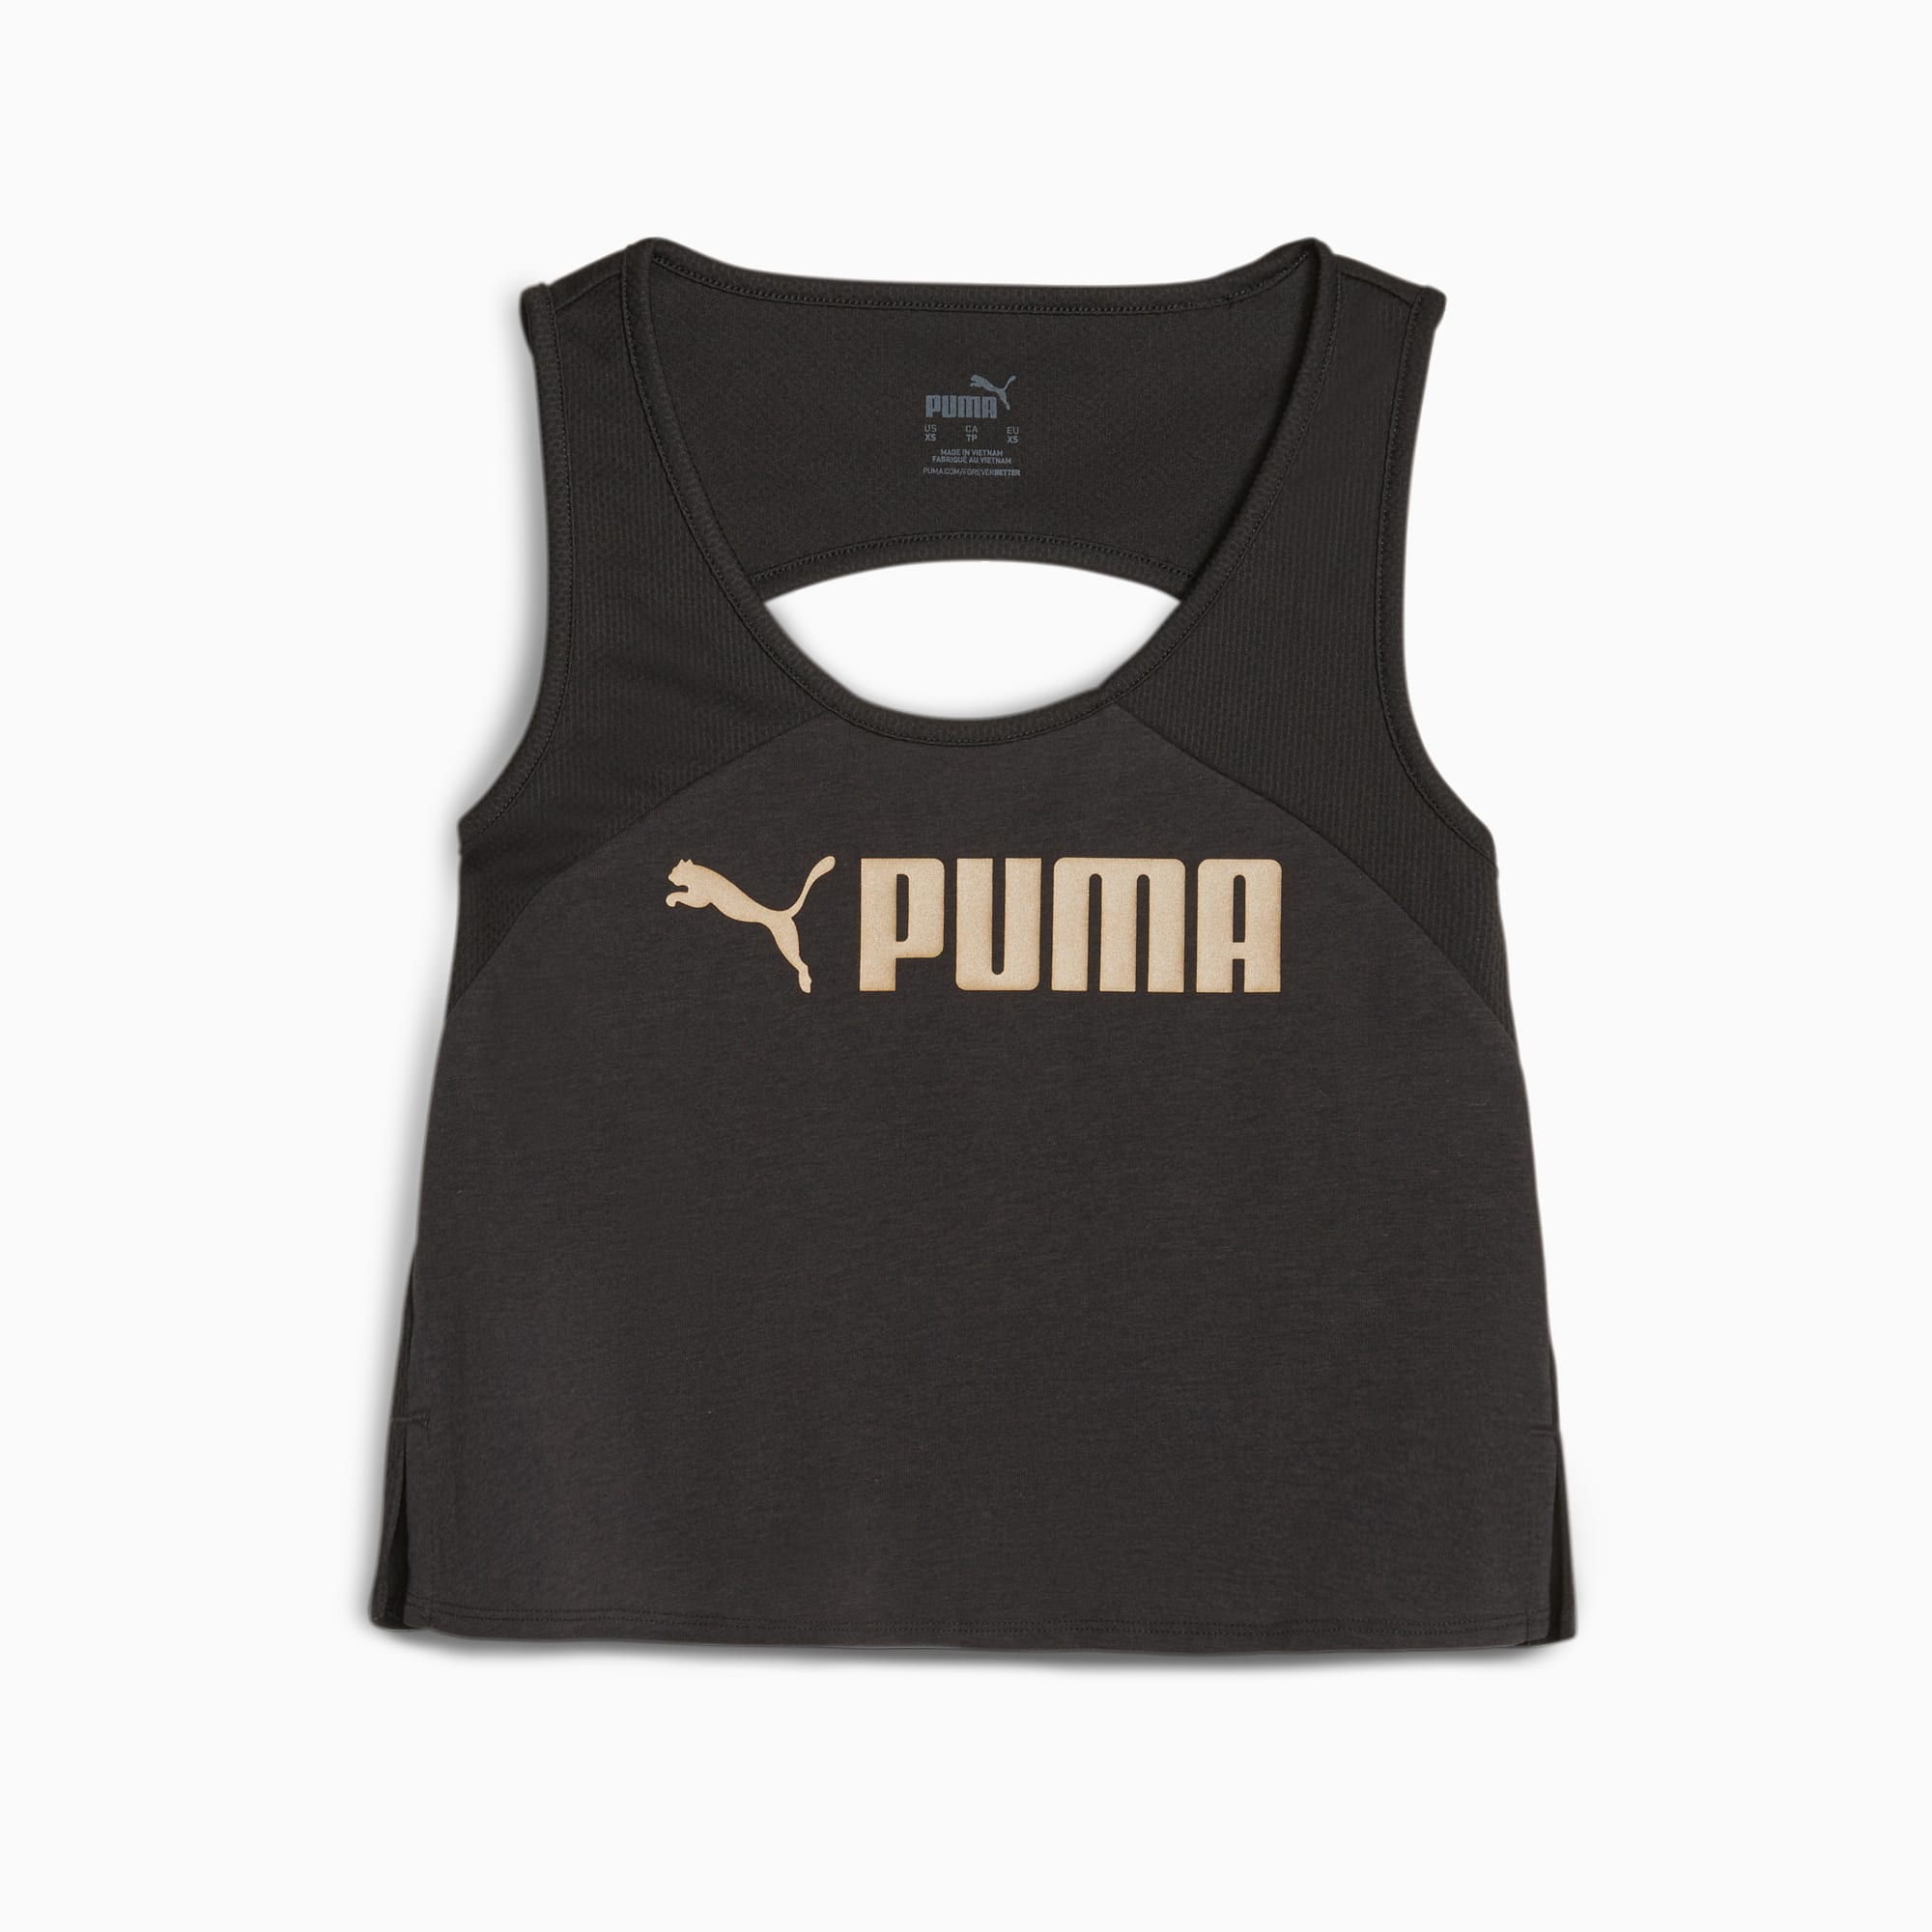 PUMA Fit Skimmer Trainingstanktop Voor Dames, Goud/Zwart